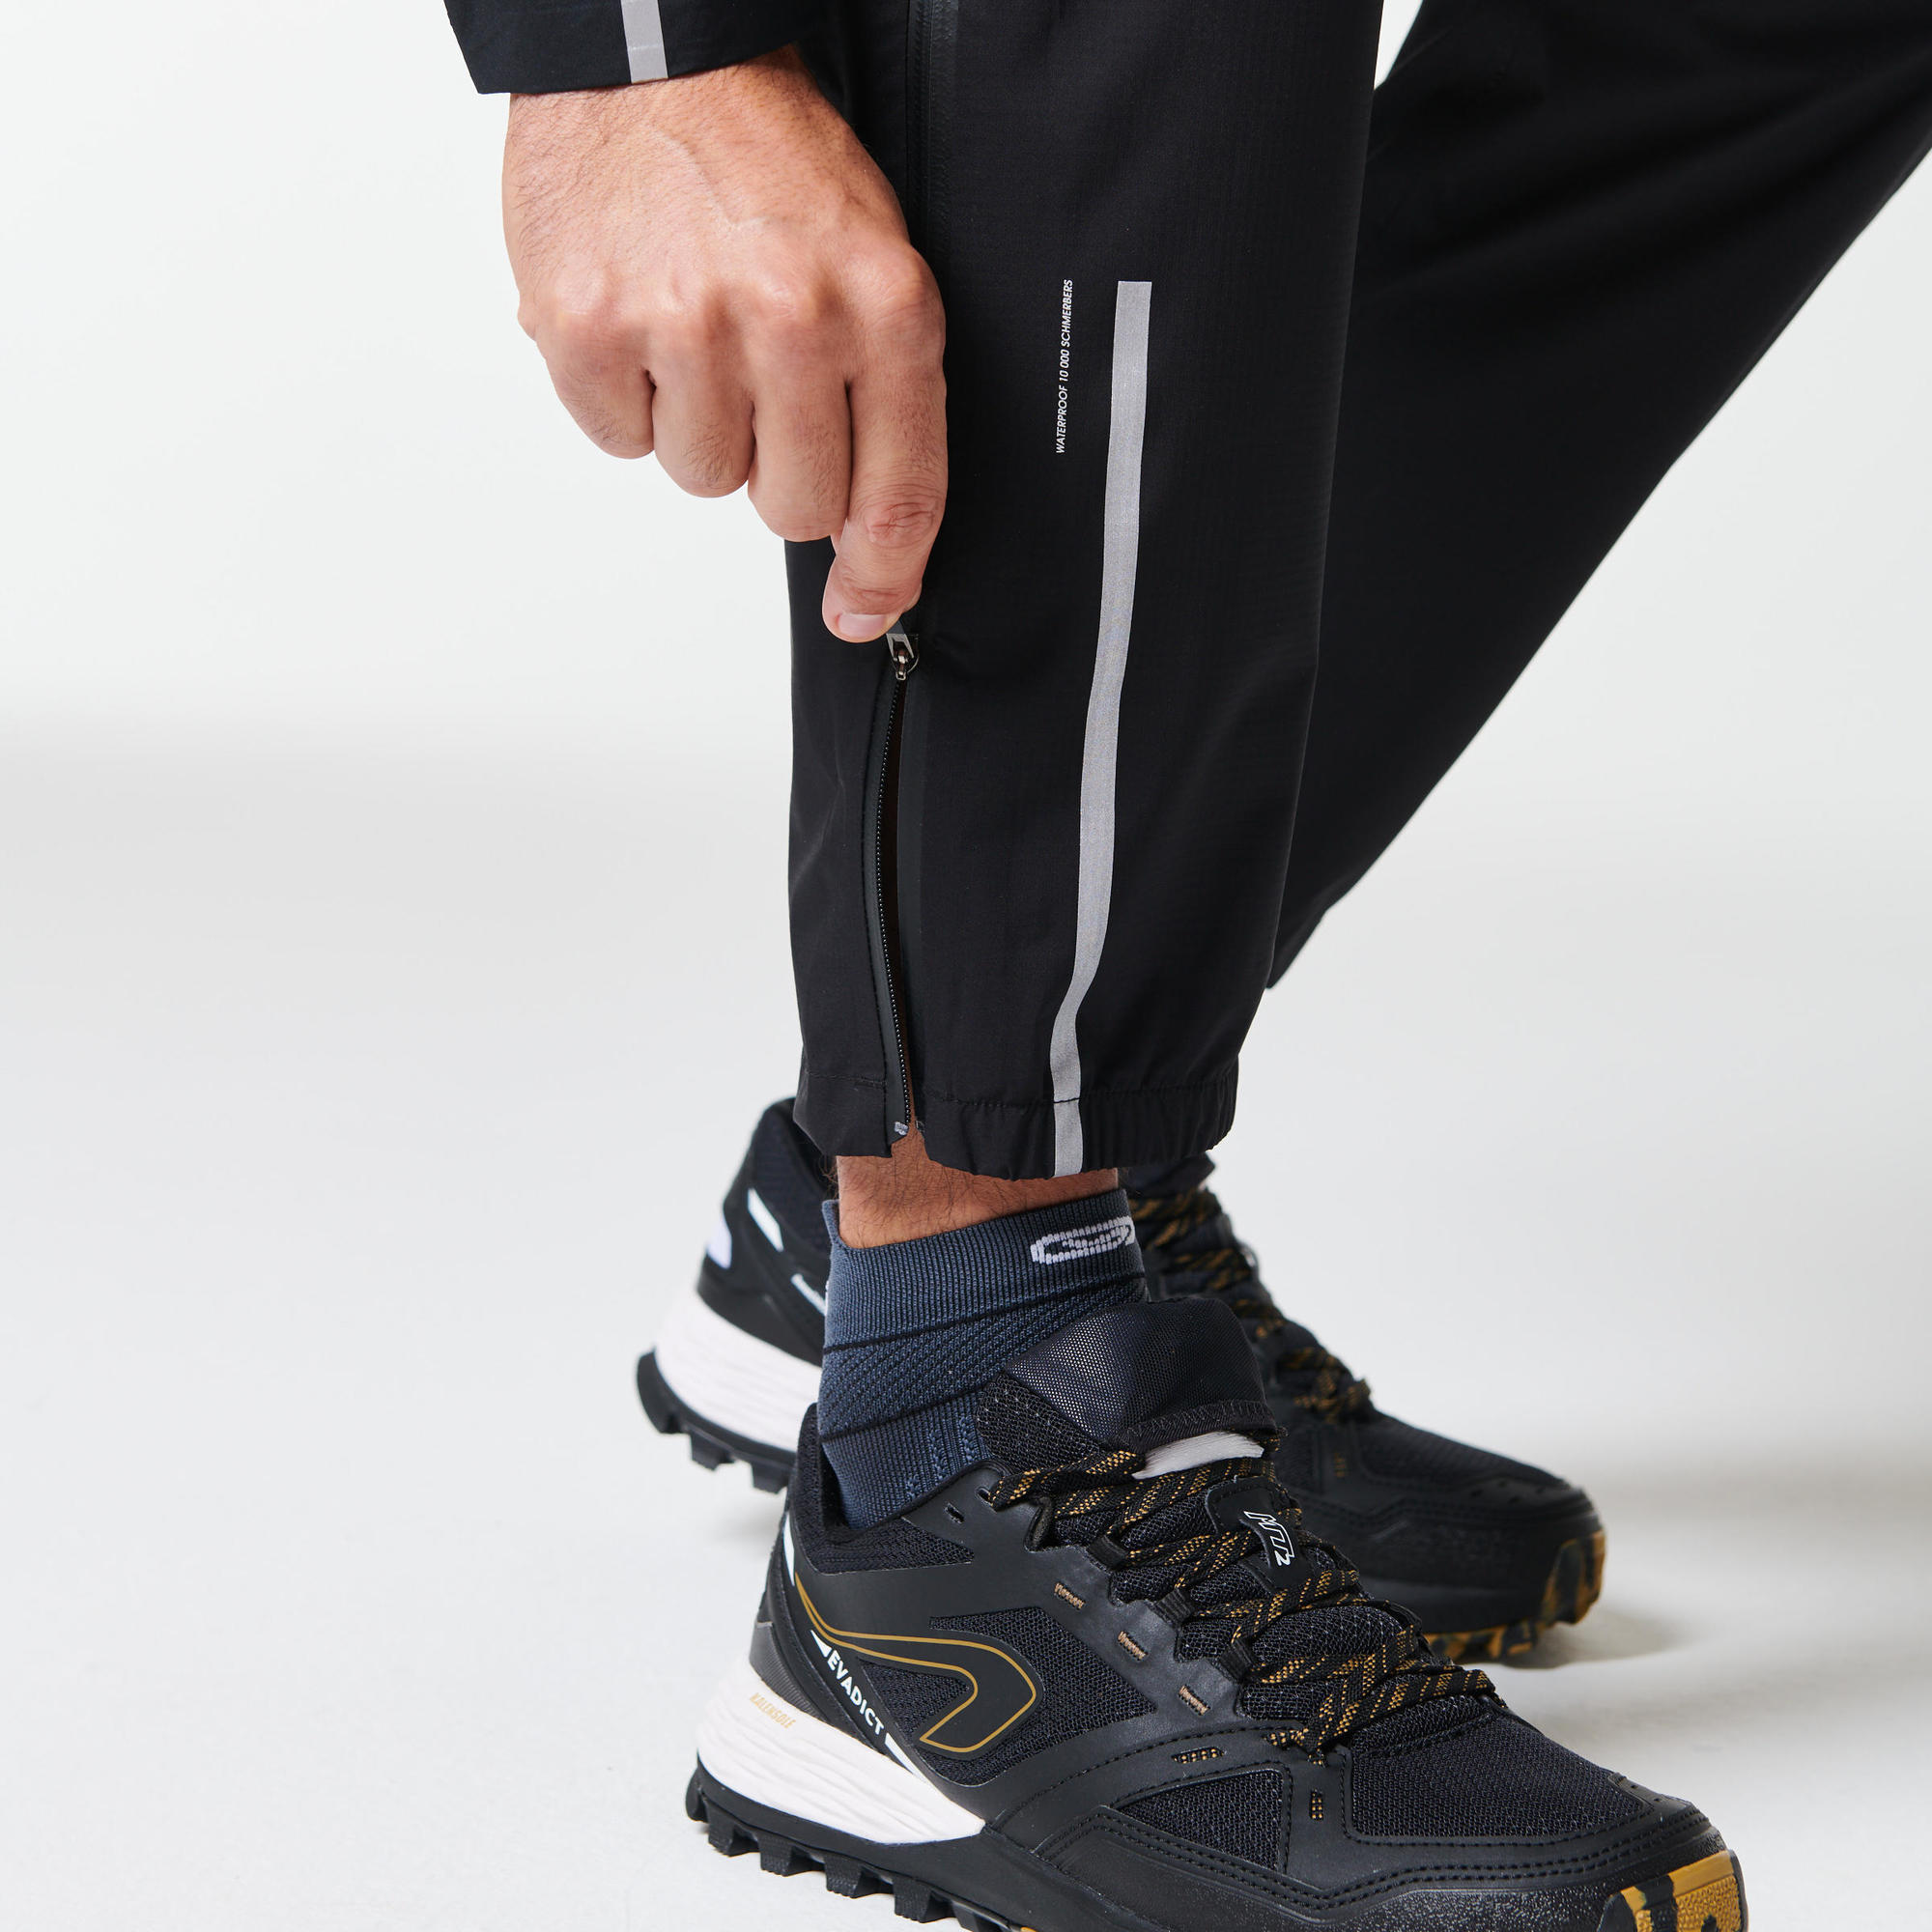 Men's Waterproof over trousers - 20,000 mm - Taped seams - MT500 FORCLAZ |  Decathlon